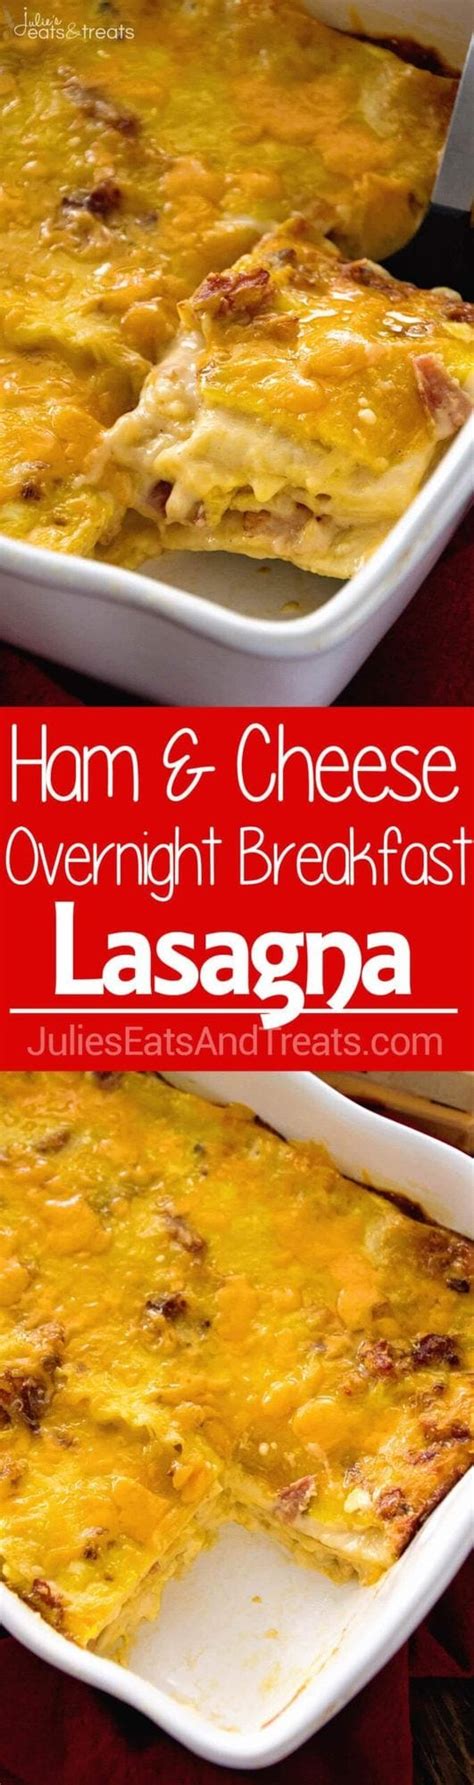 Overnight Breakfast Lasagna Recipe Julies Eats And Treats